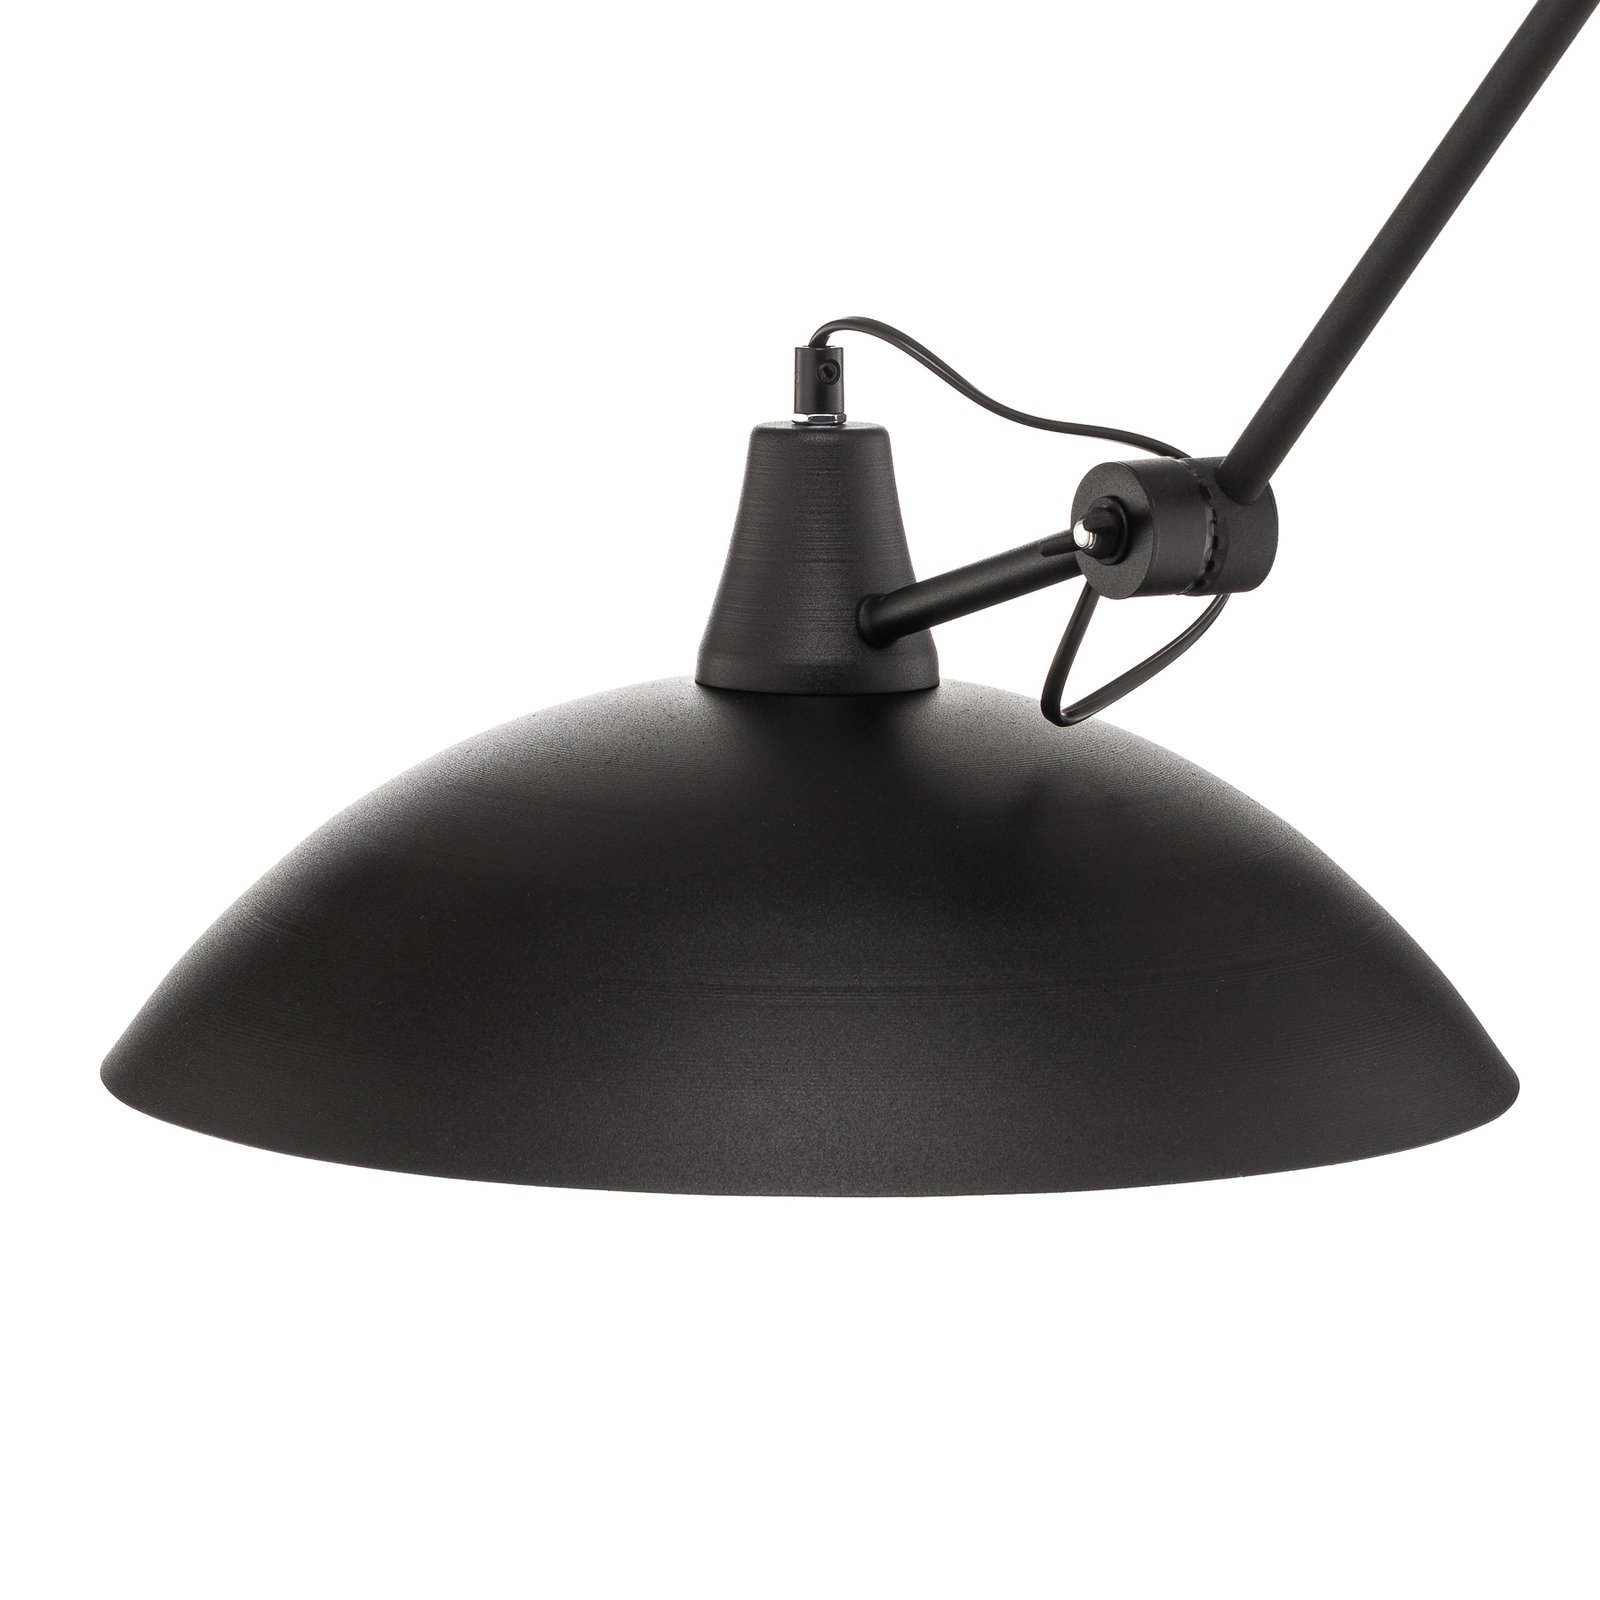 808 ceiling lamp, adjustable, 1-bulb, black/gold